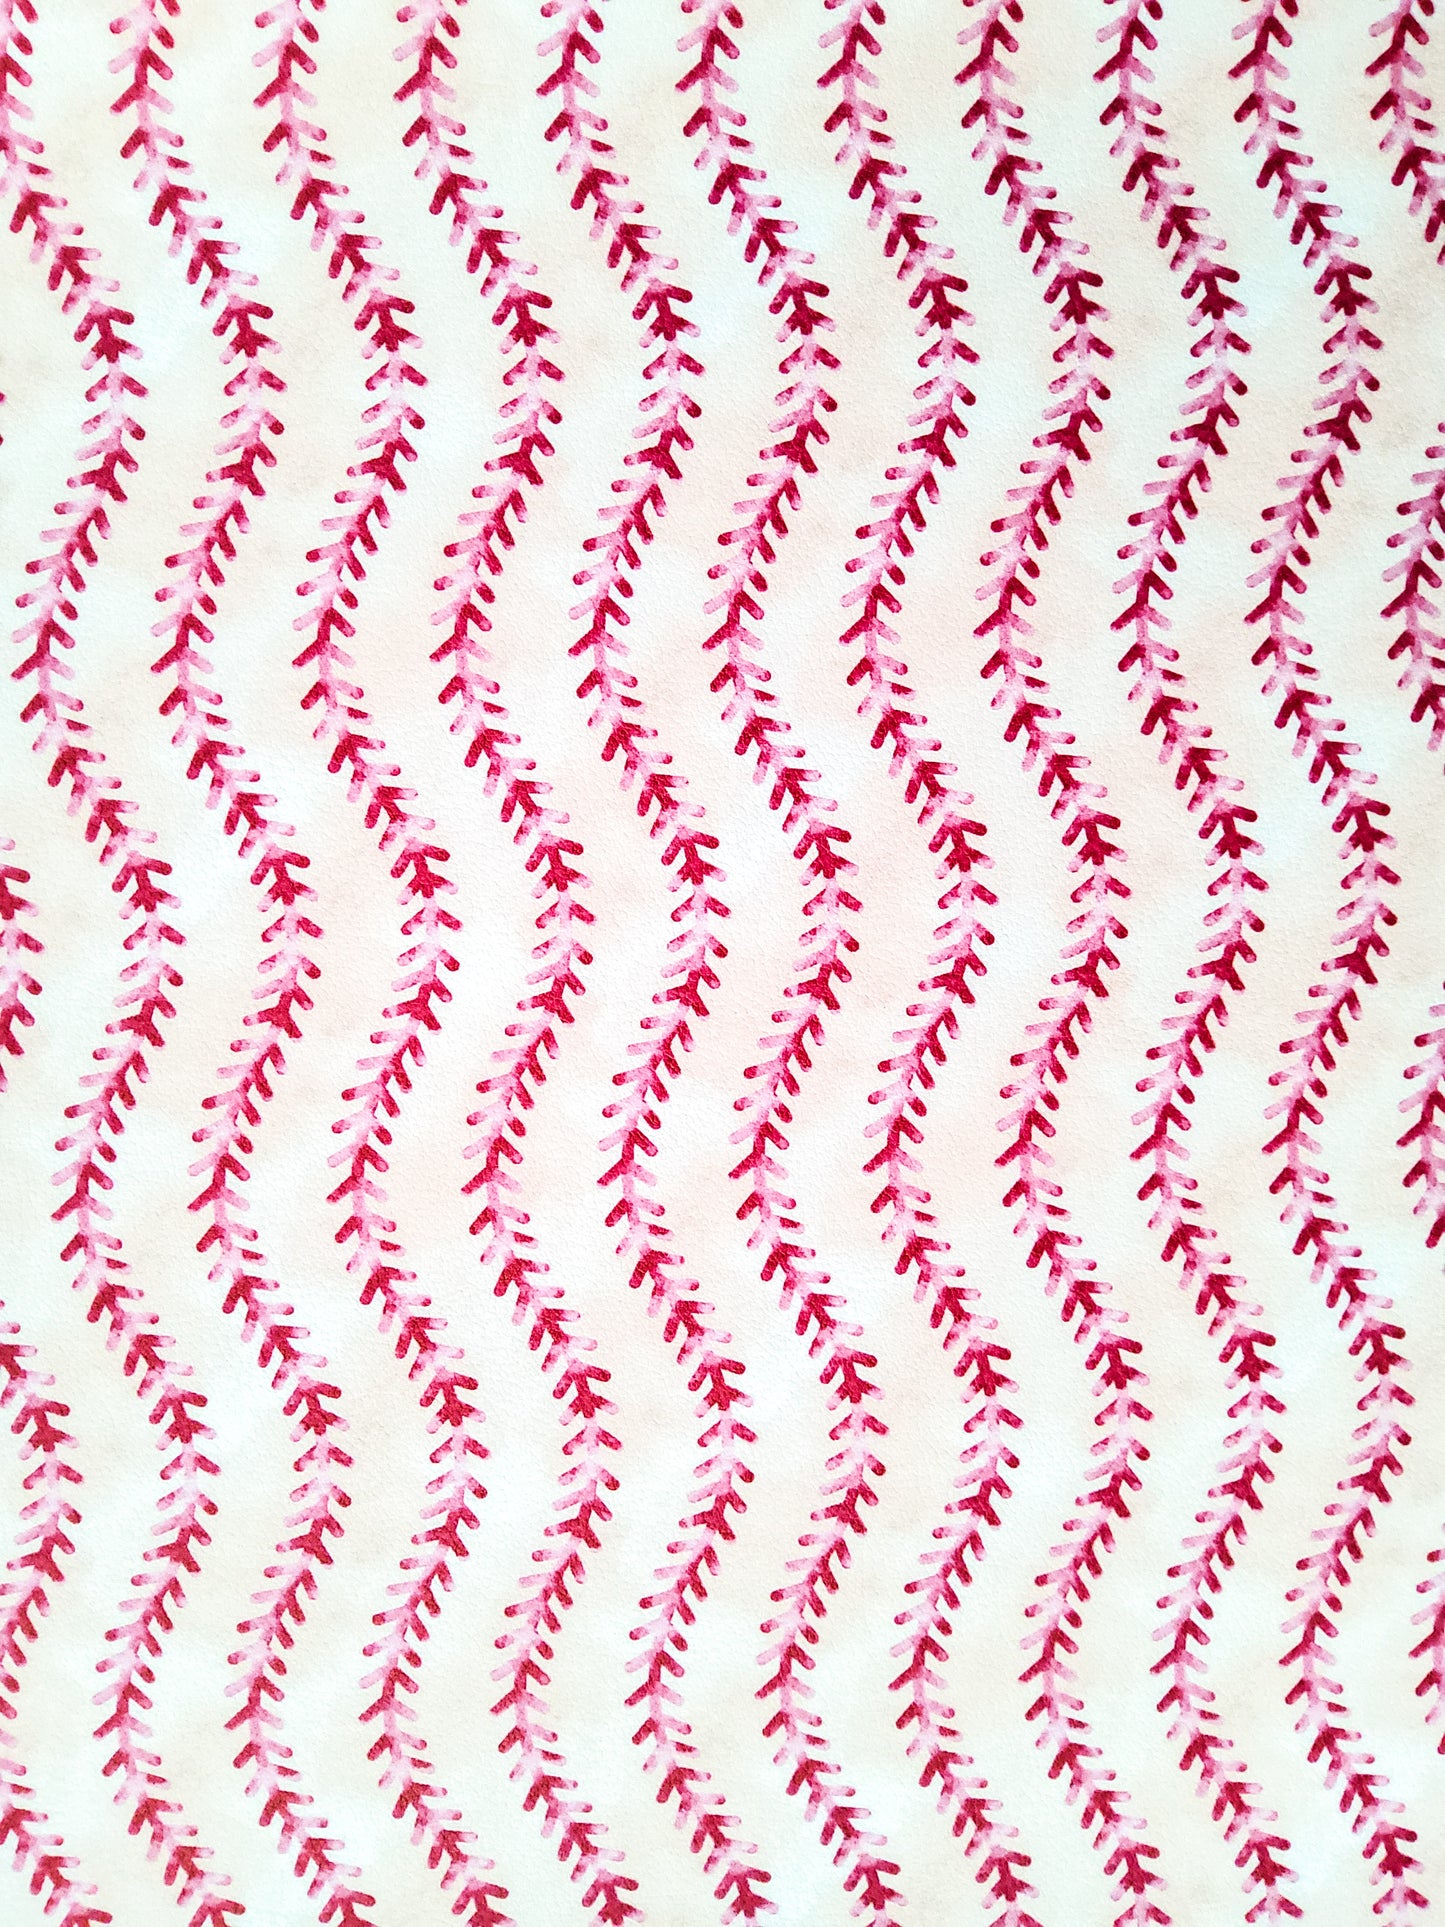 Baseball Stitches 9x12 faux leather sheet